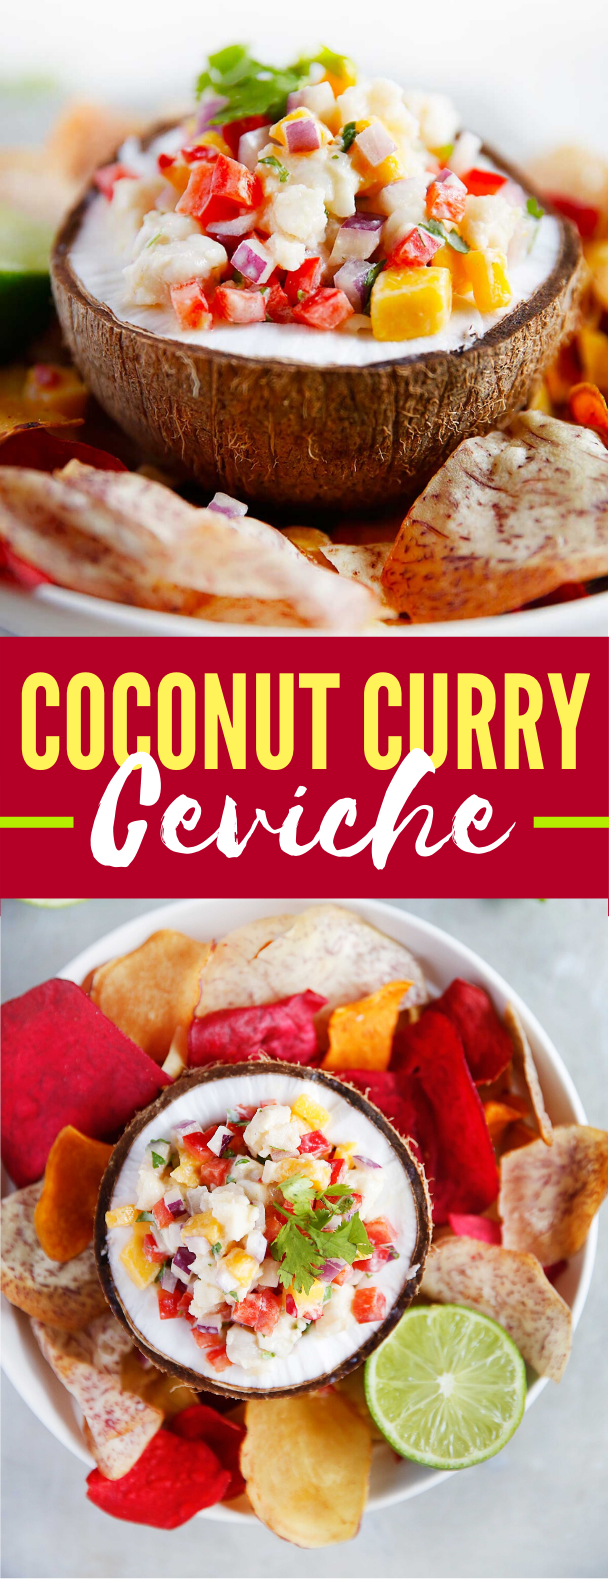 COCONUT CURRY CEVICHE #meals #summerrecipe #recipe #appetizers #comfortfood